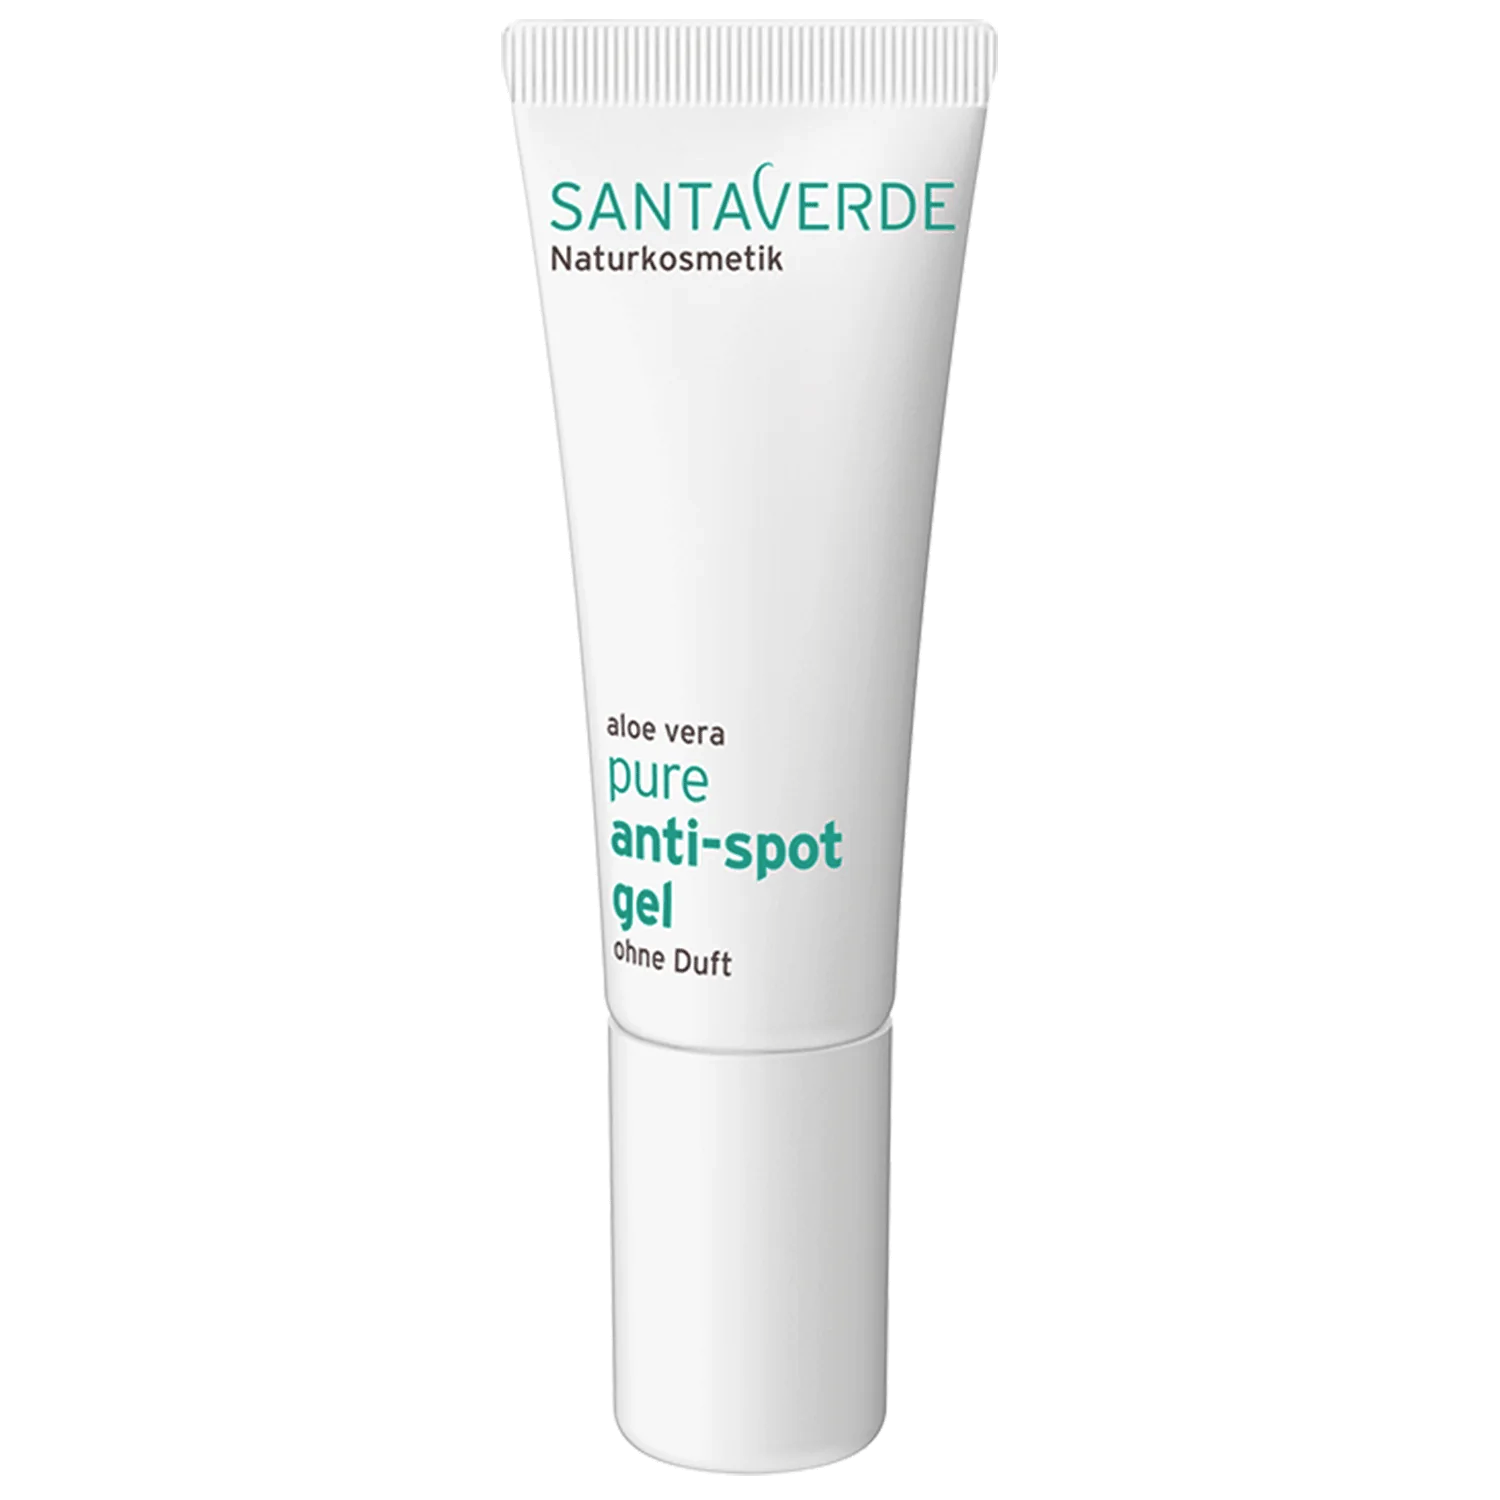 Santaverde pure anti-spot gel | 10ml | Aloe Vera & ohne Duft